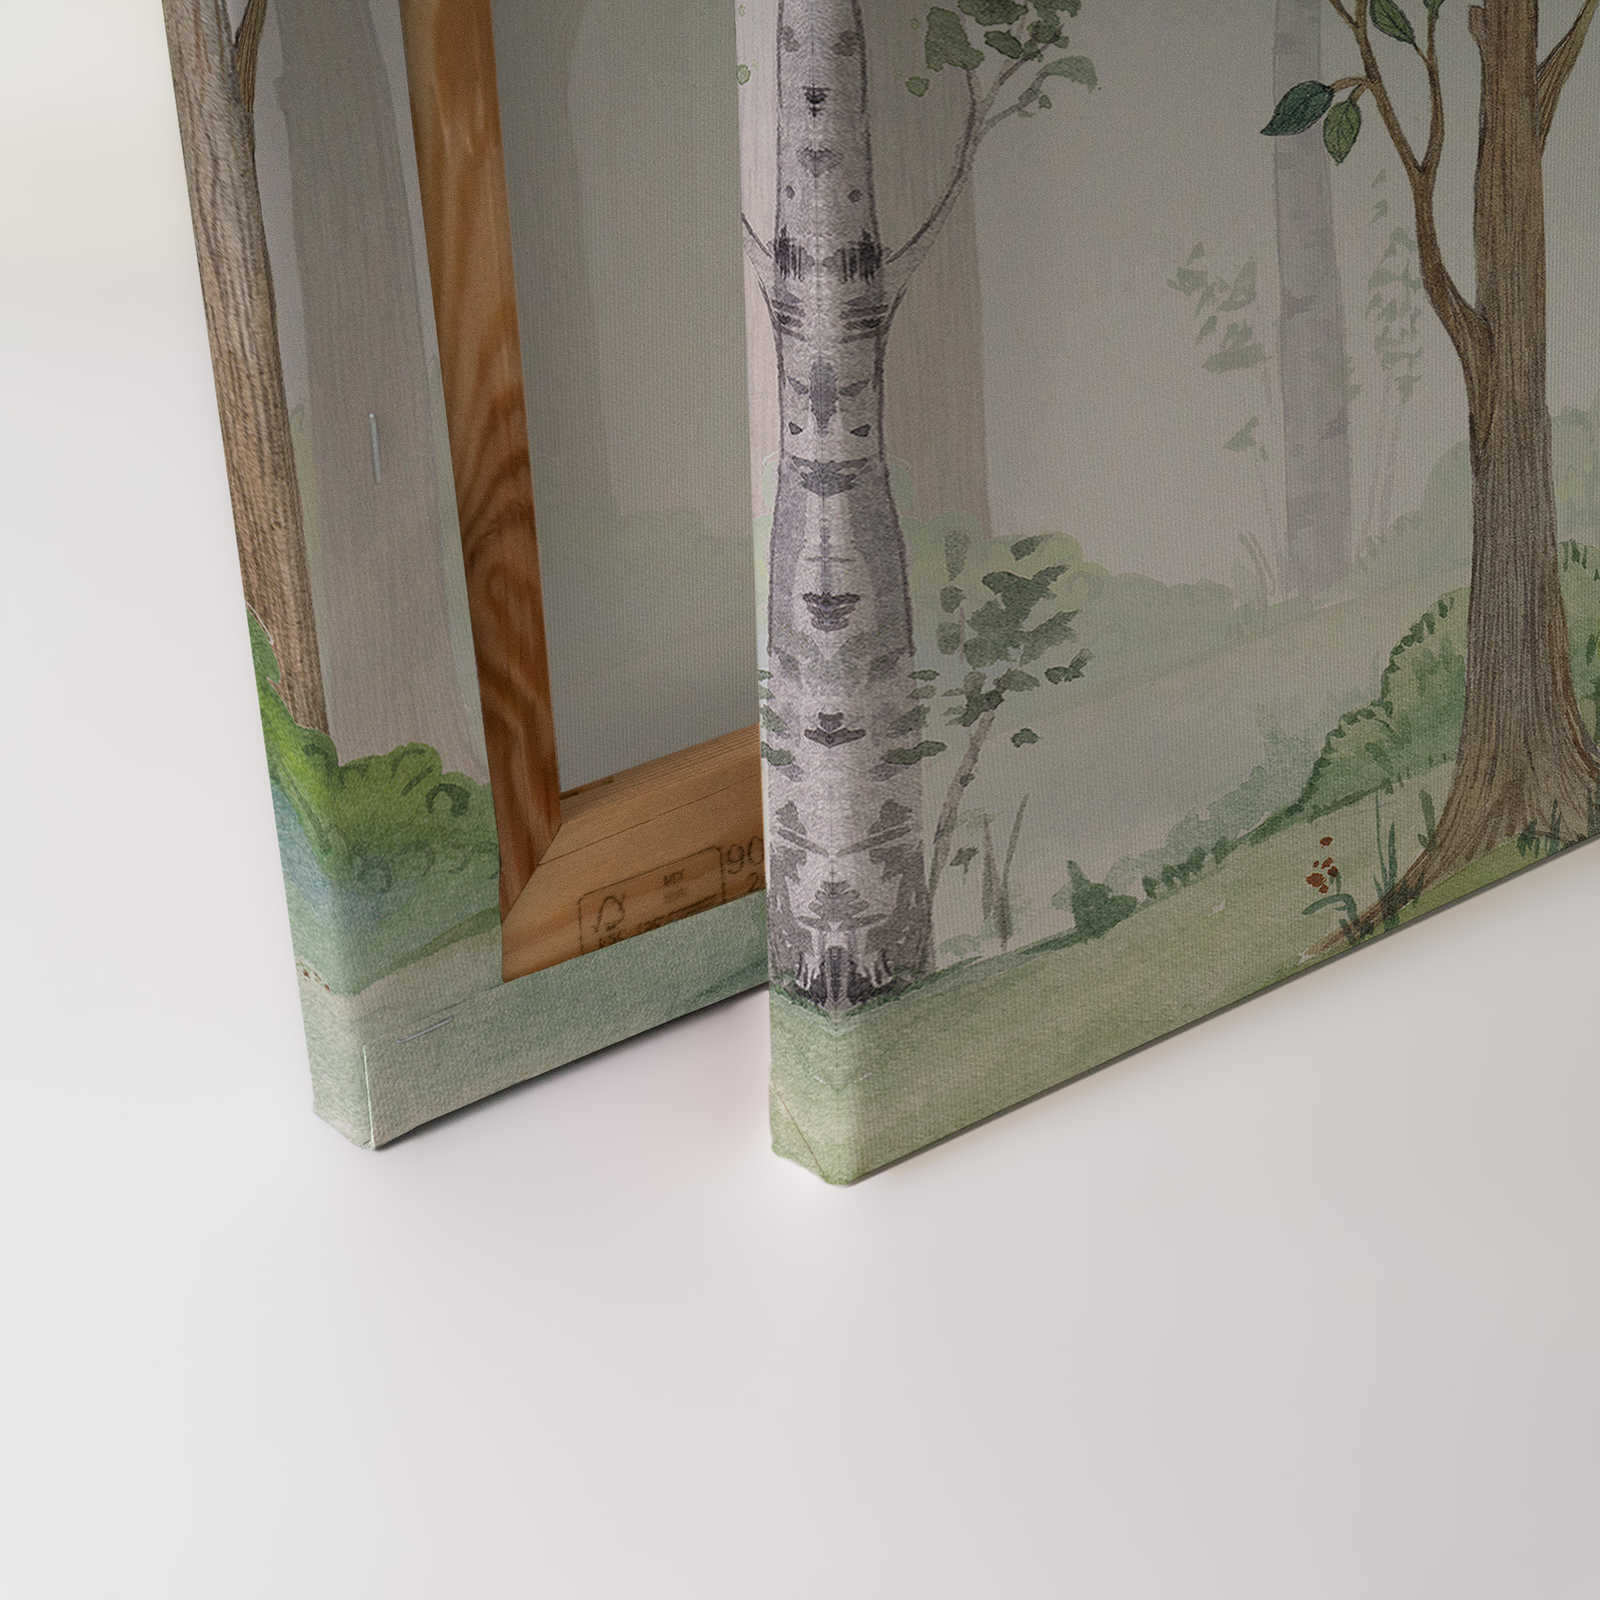             Cuadro en lienzo con bosque pintado para habitación infantil - 0,90 m x 0,60 m
        